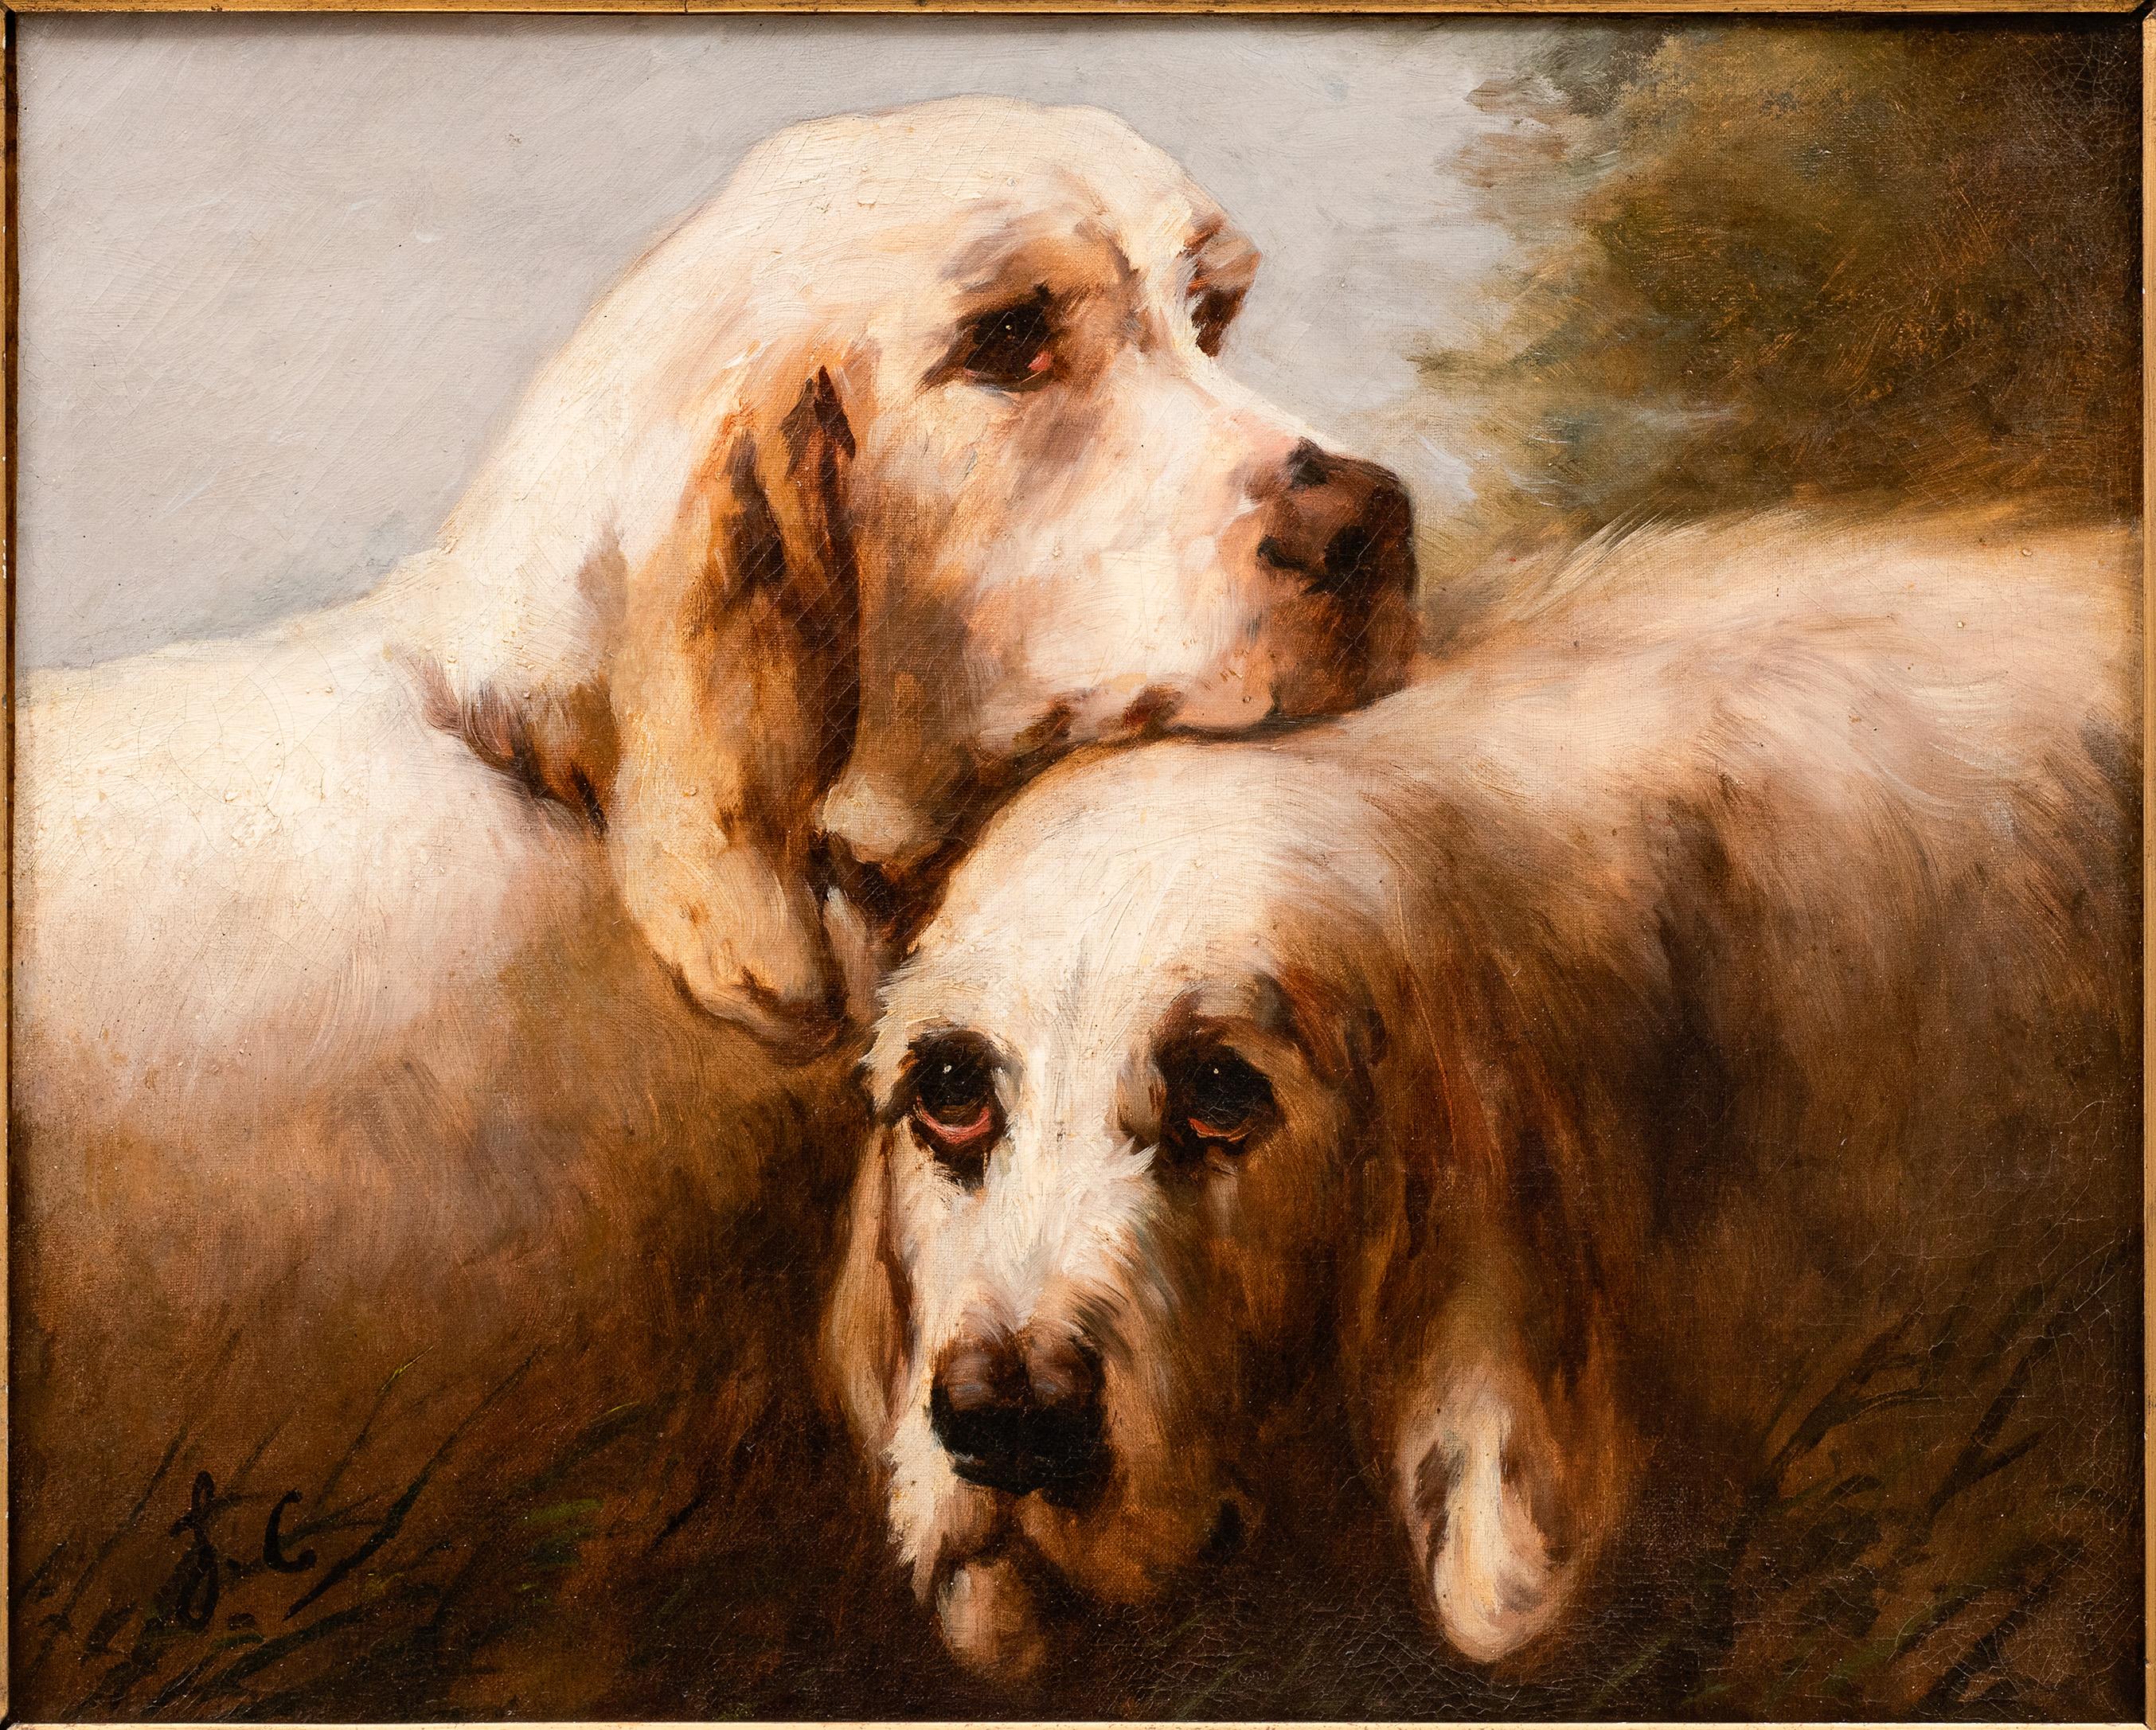 Antique Dog Painting: Pair of Grand Griffon Vendéen Hunting Dogs, circa 1870